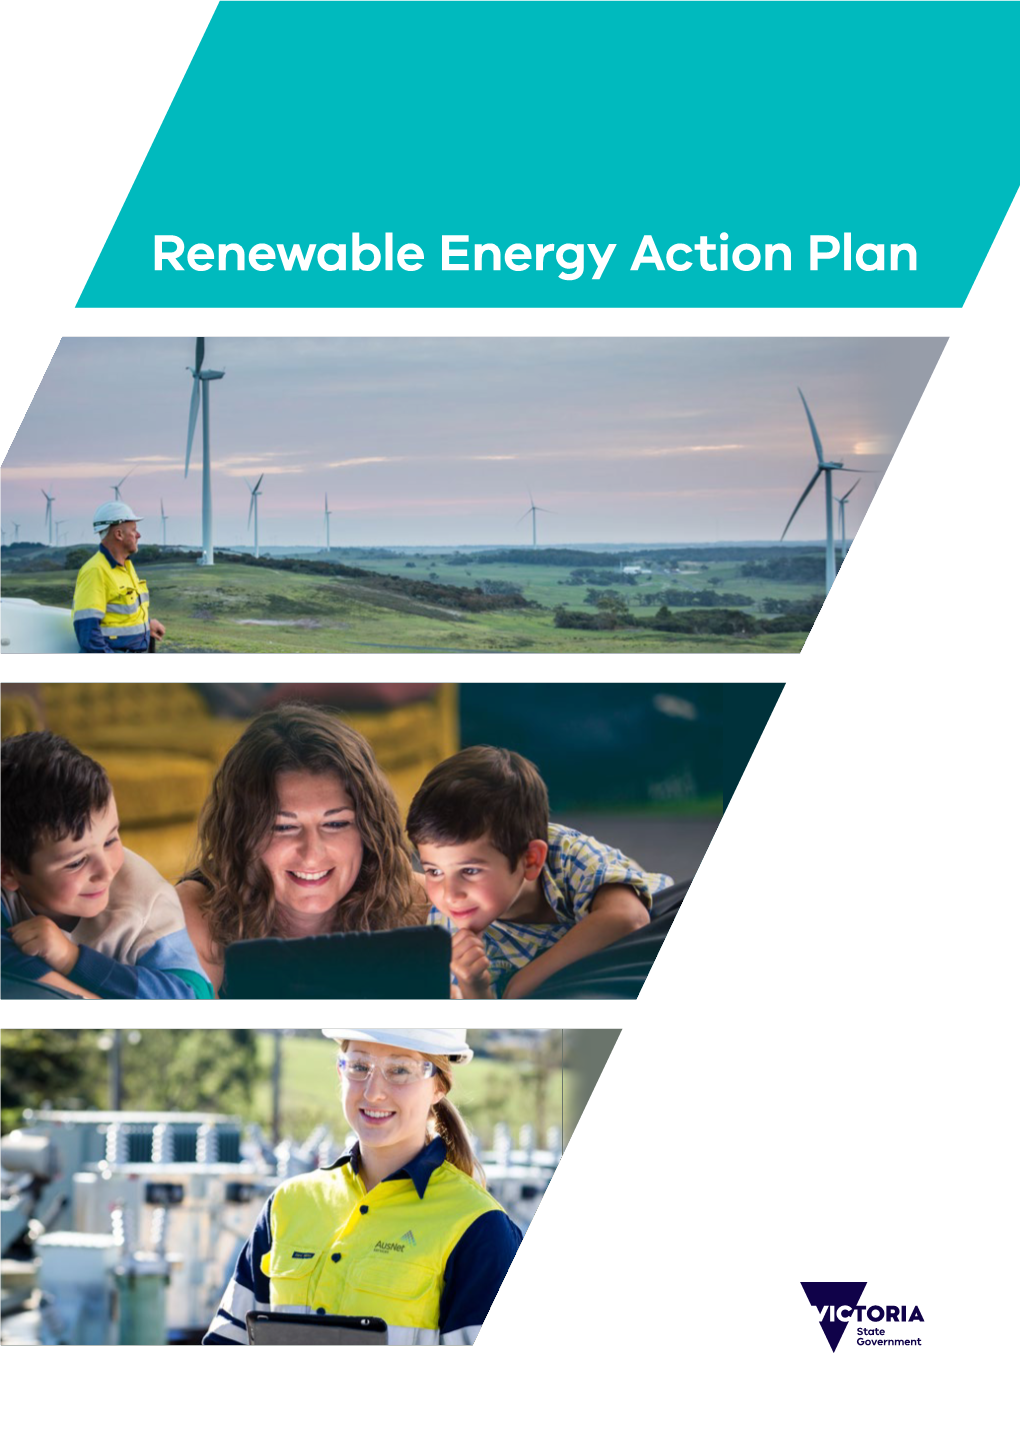 Victoria's Renewable Energy Action Plan